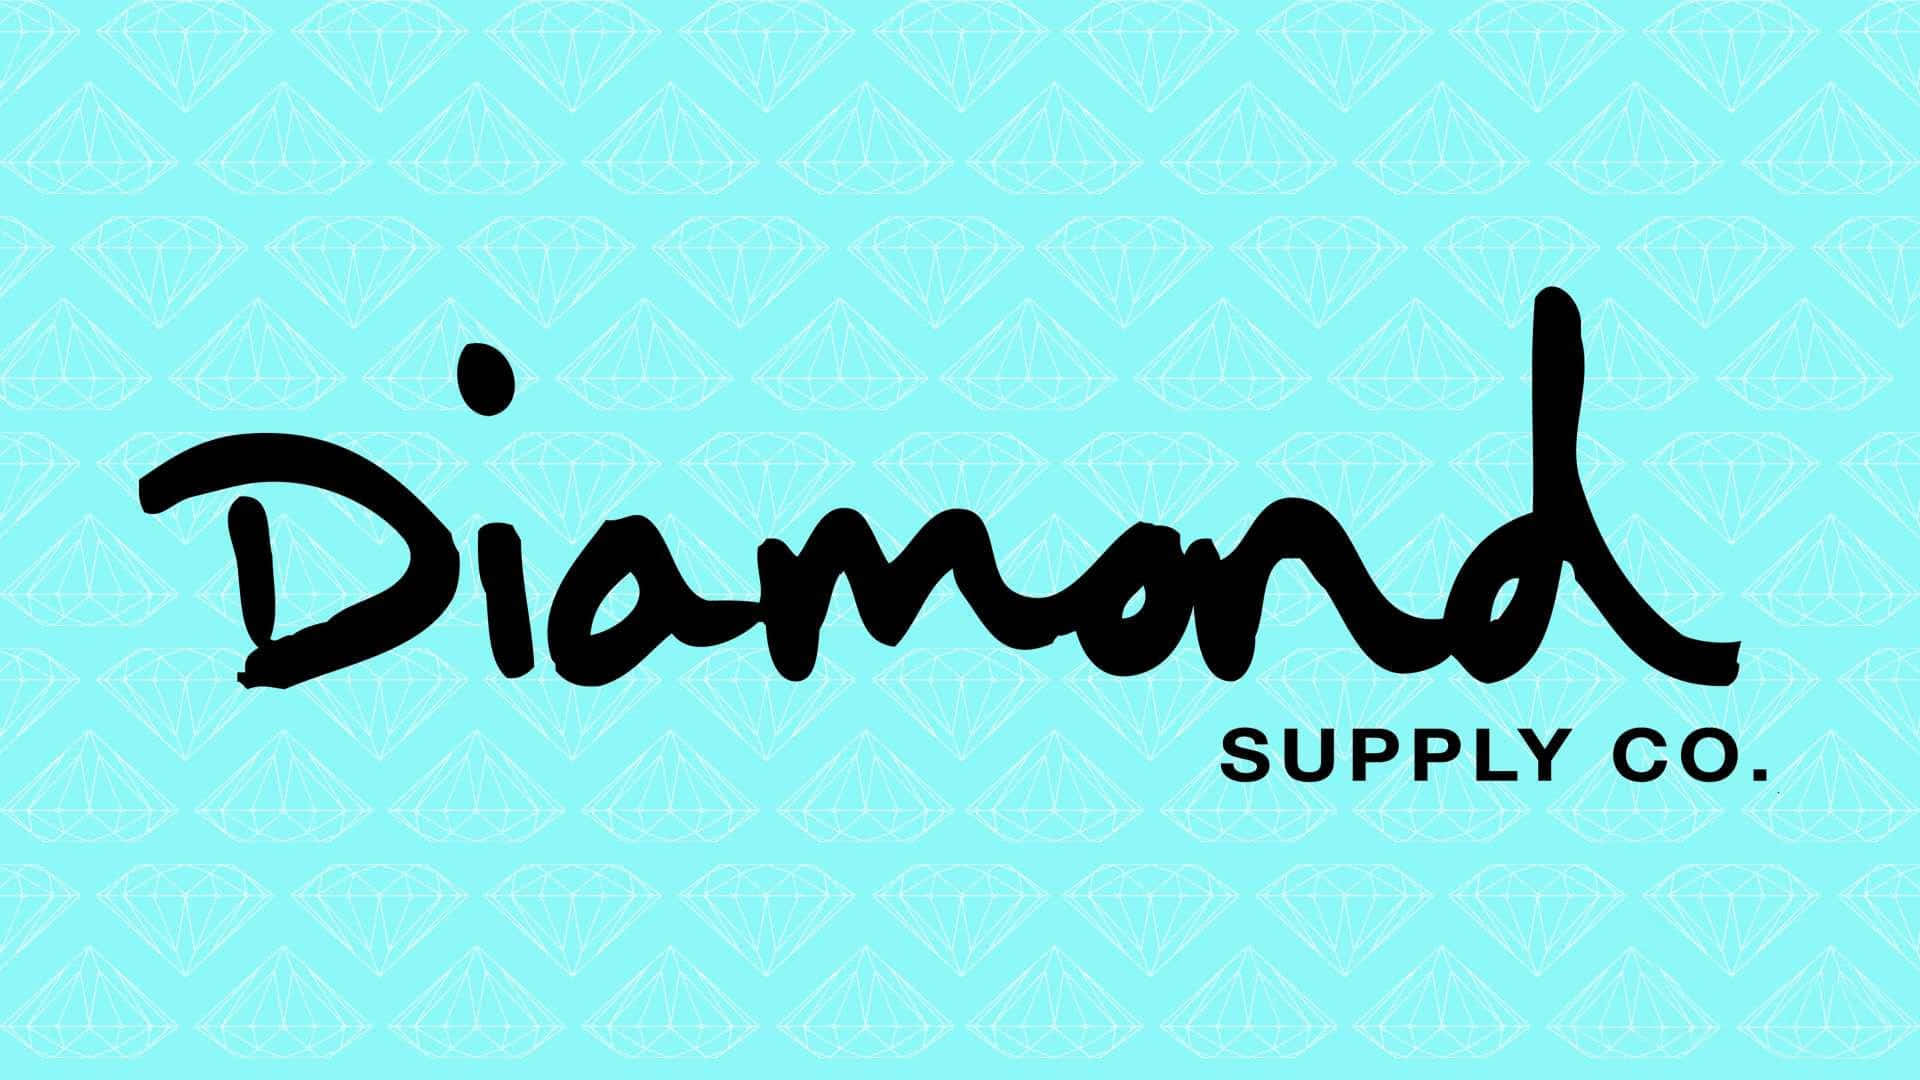 Diamond Supply Co Logo Turquoise Background Wallpaper